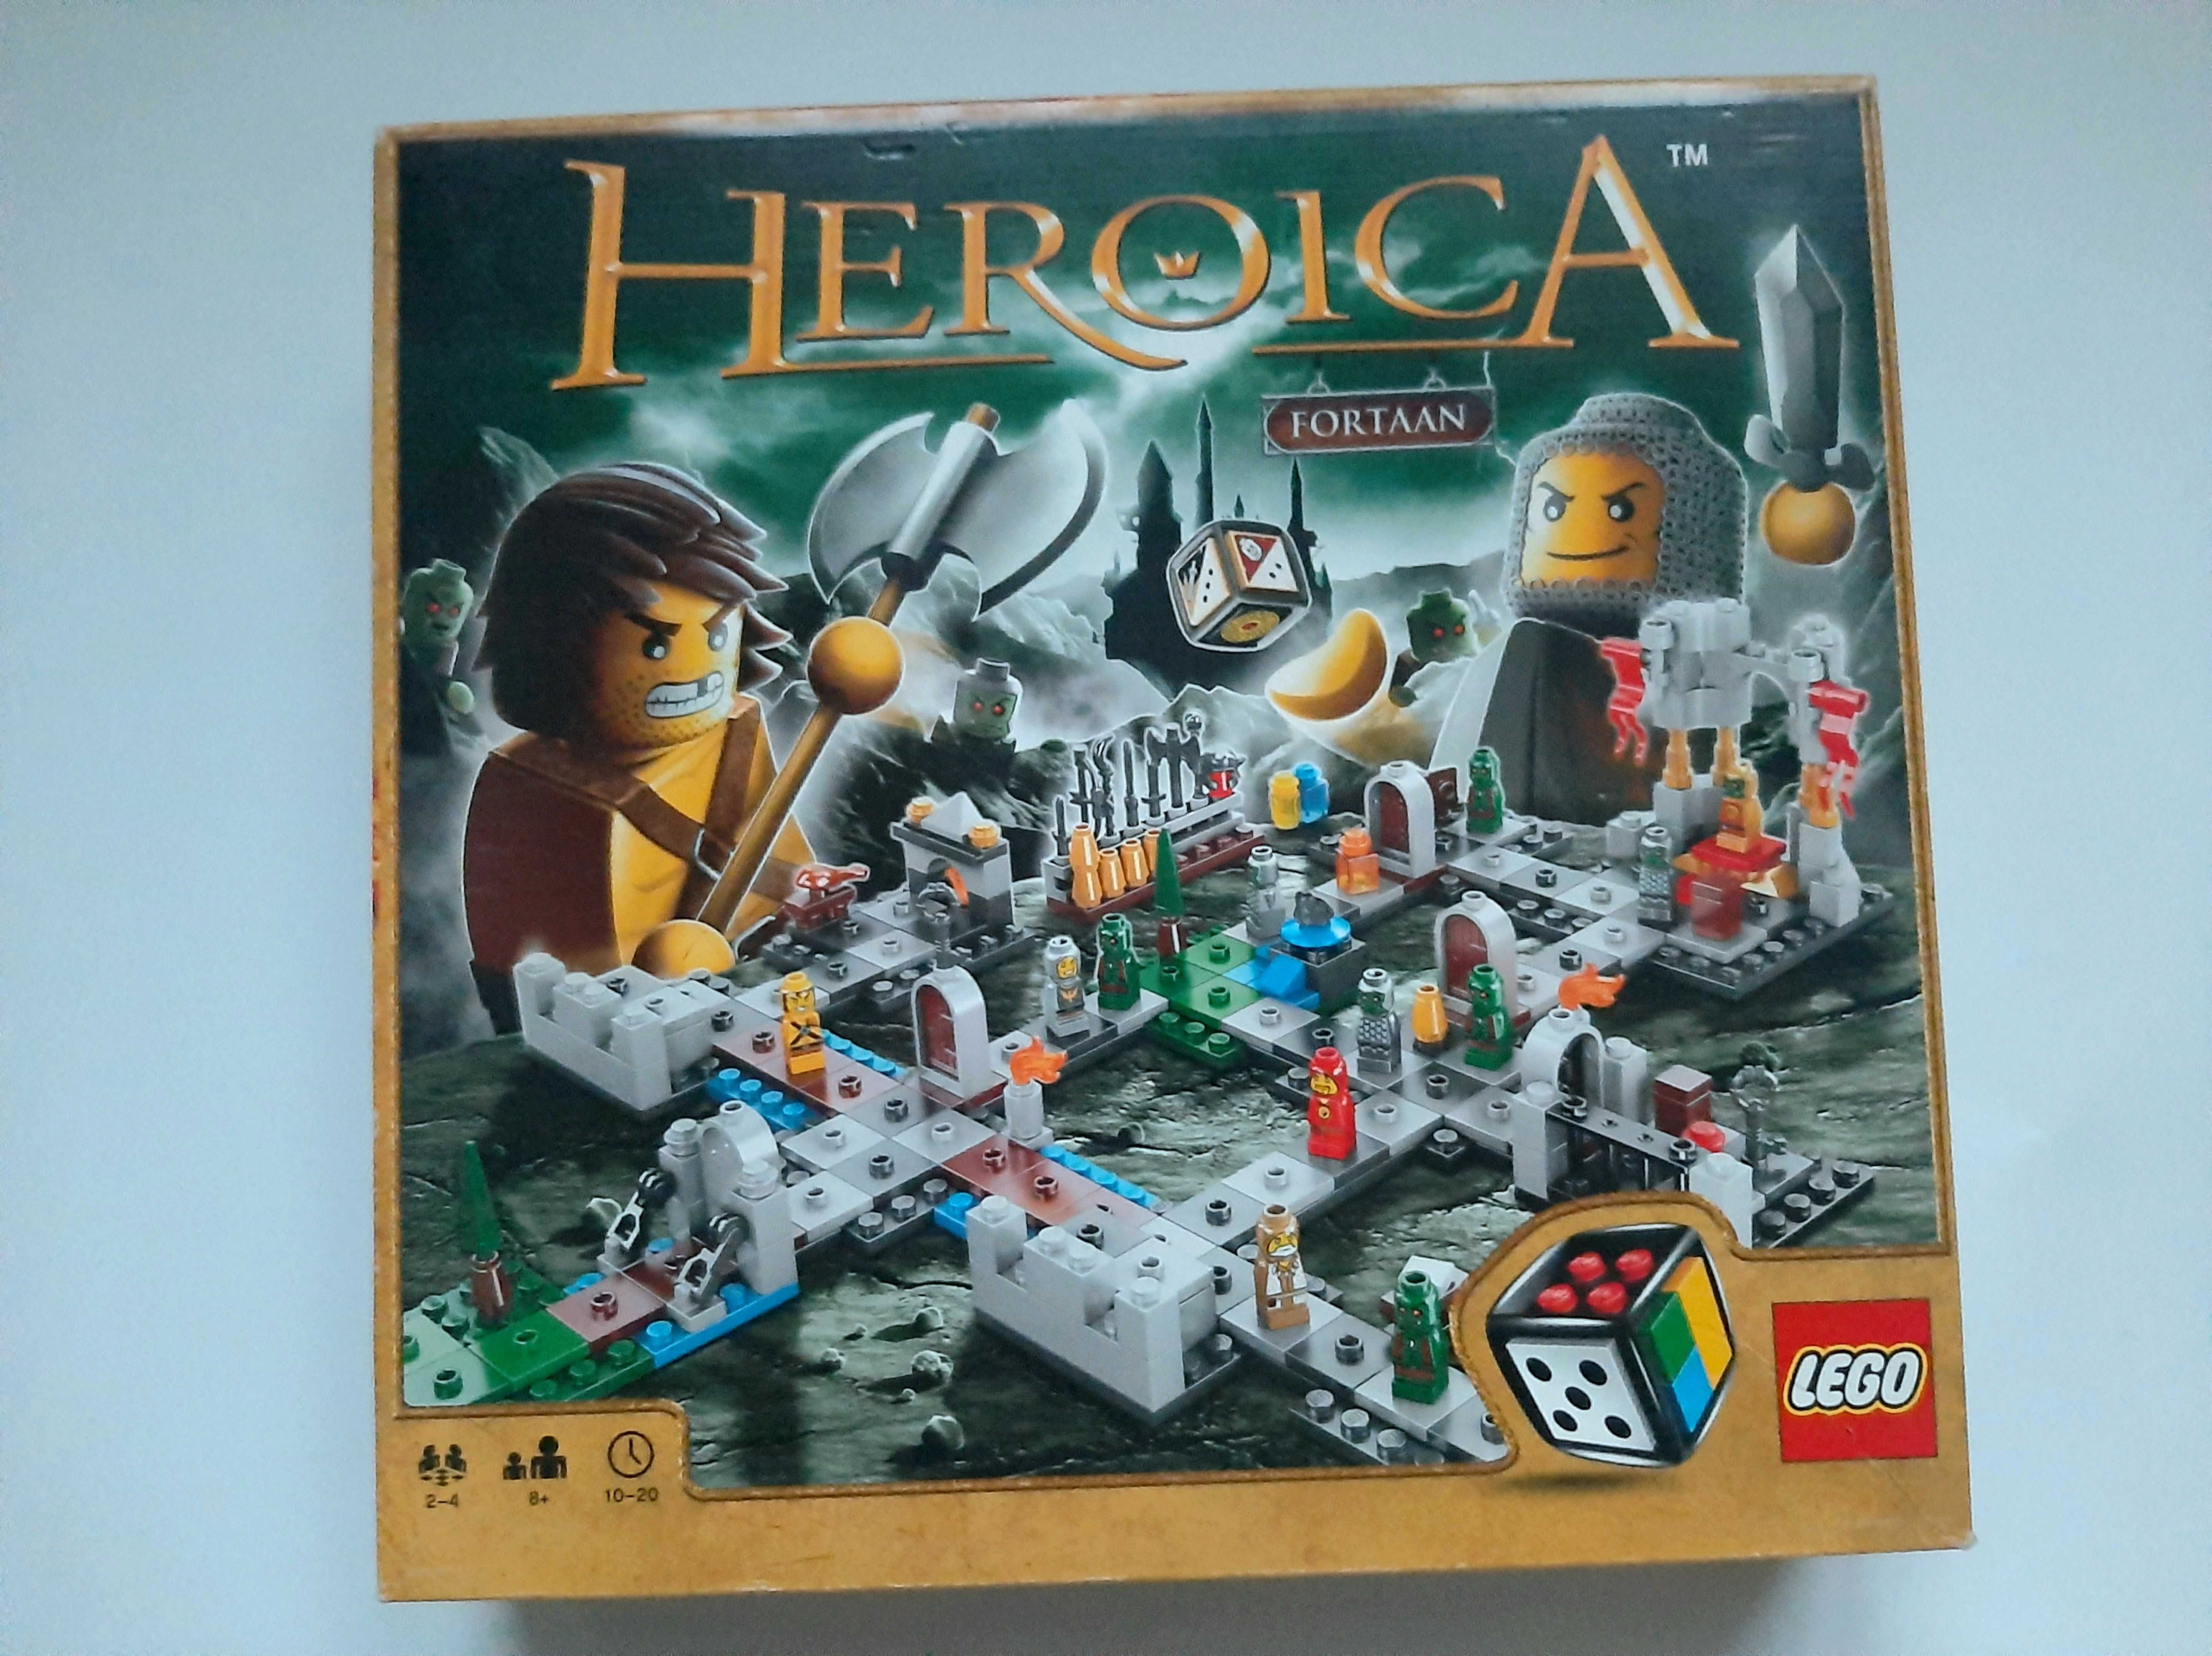 Gra Lego Heroica Fortaan (3860) używana, jak nowa